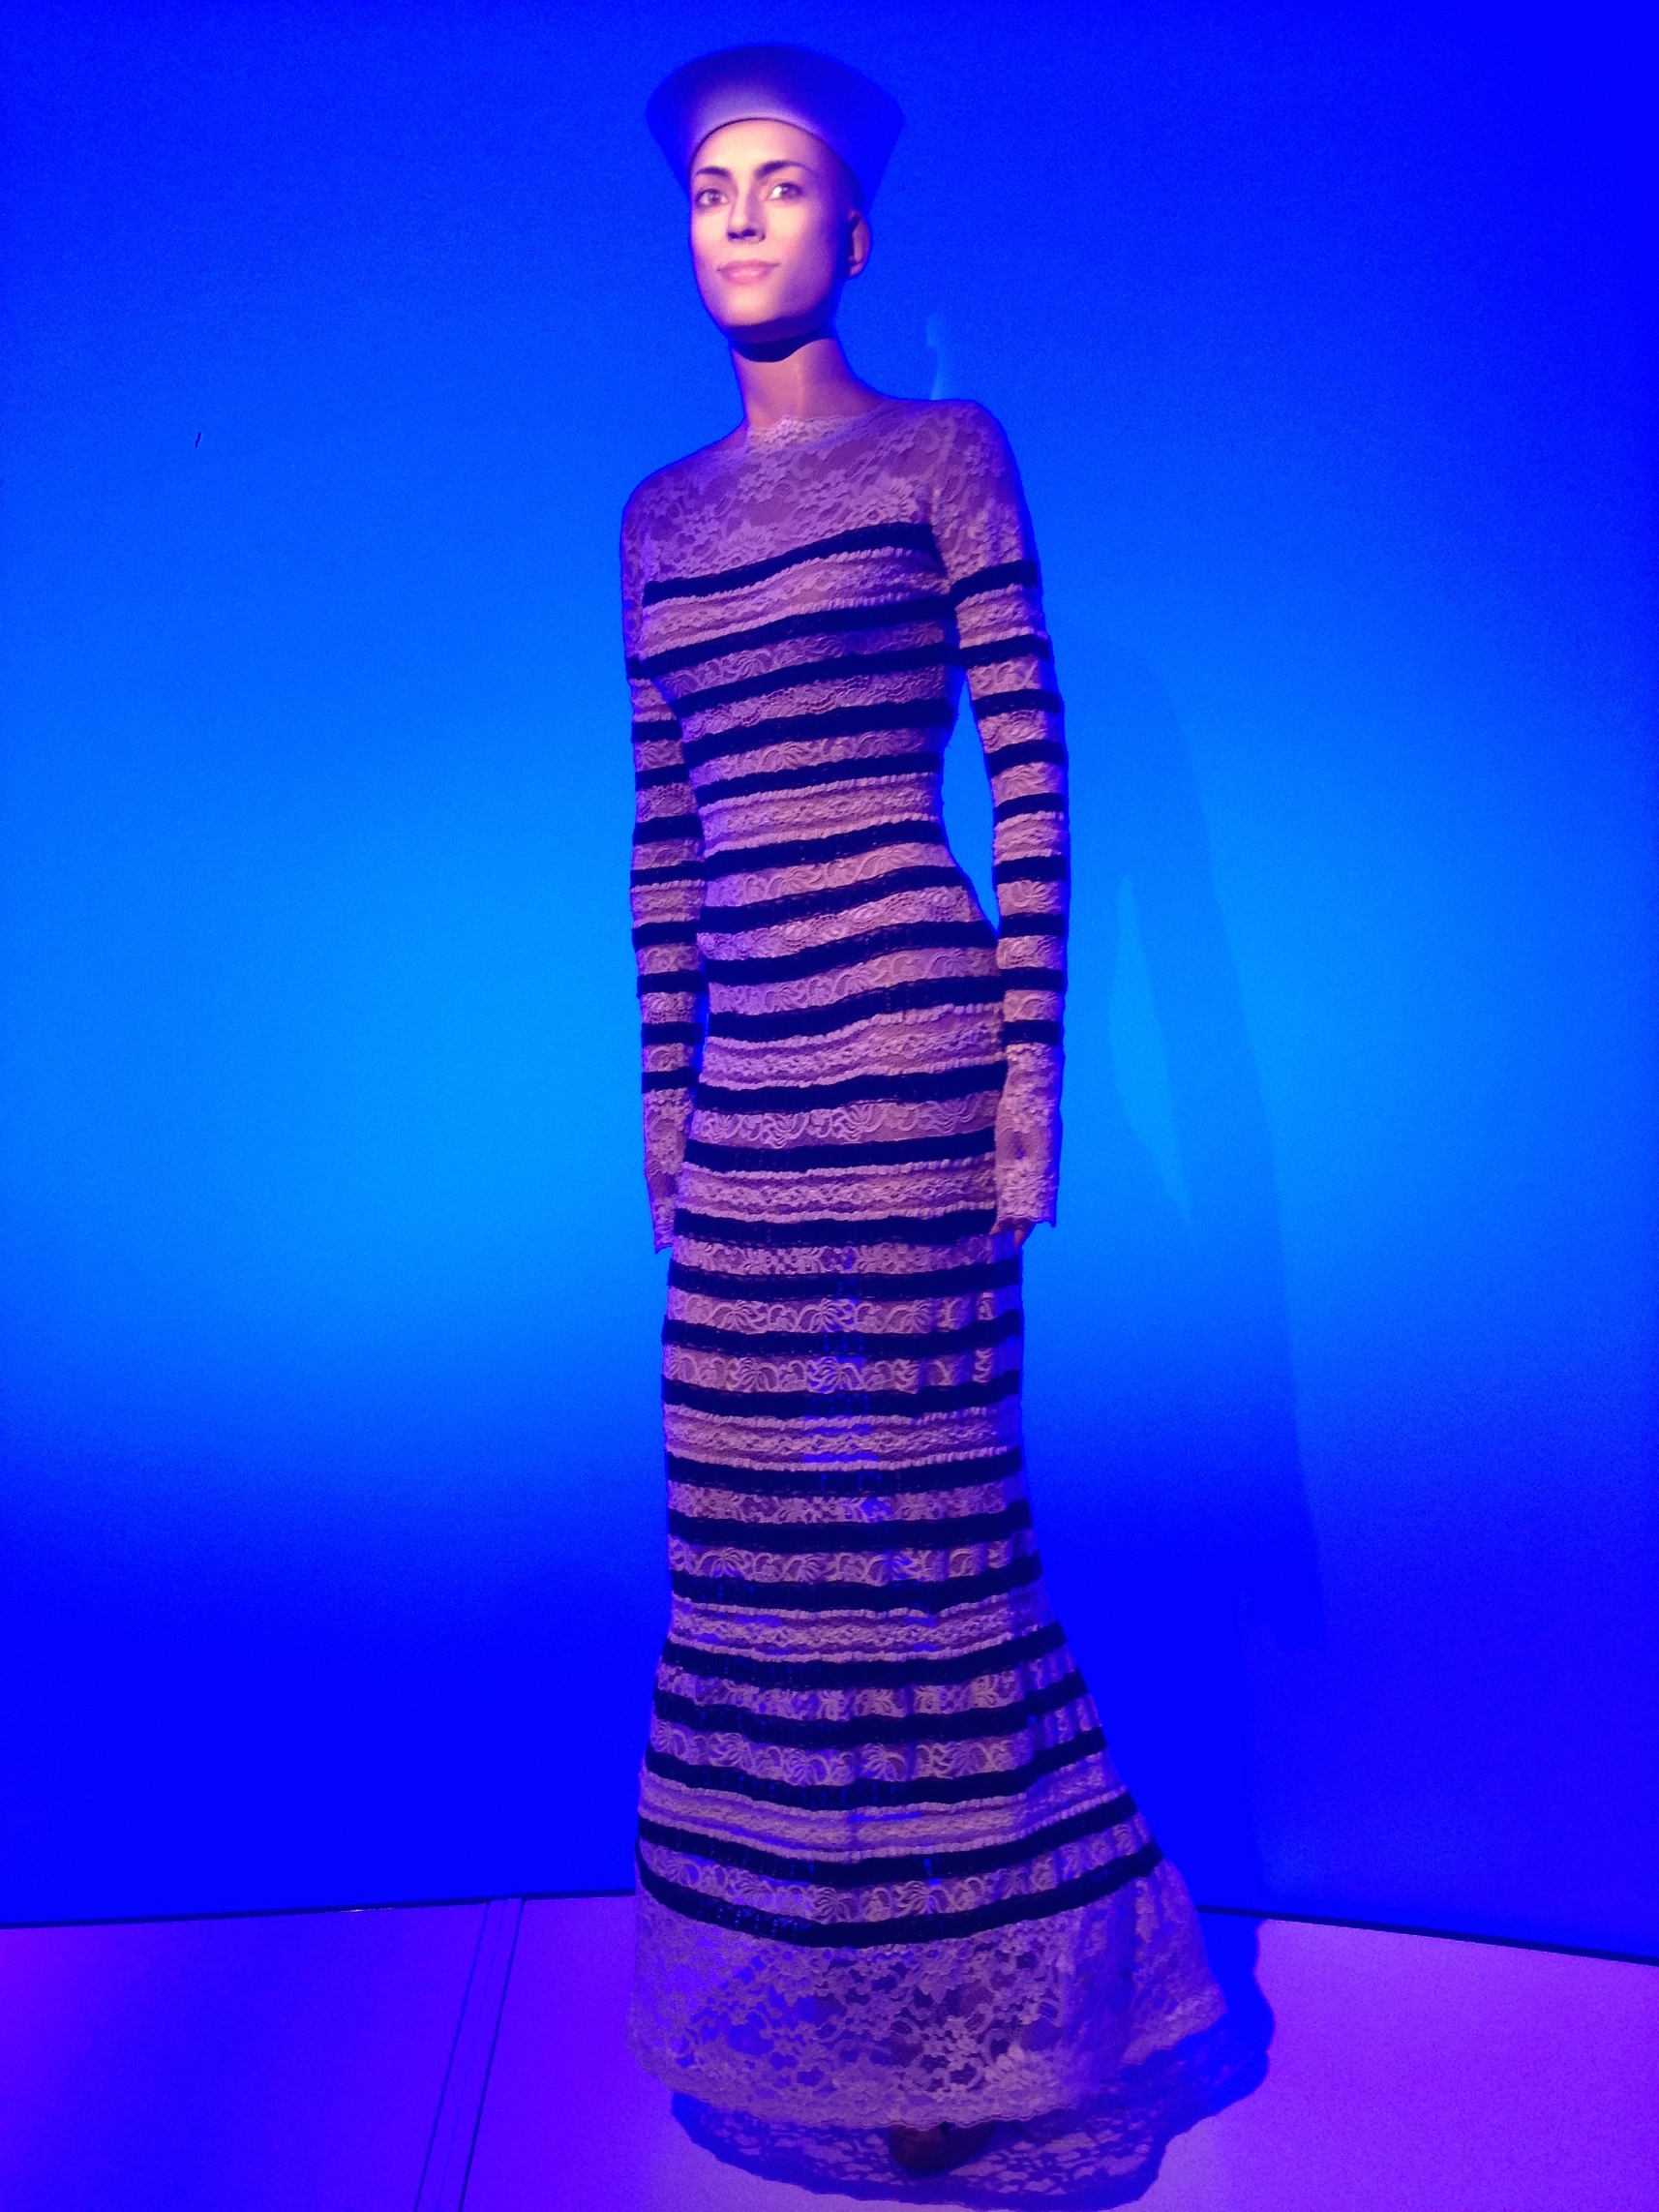 Mannequin dressed in Gaultier's iconic nuatical stripes. © Katherine Elliott, 2014